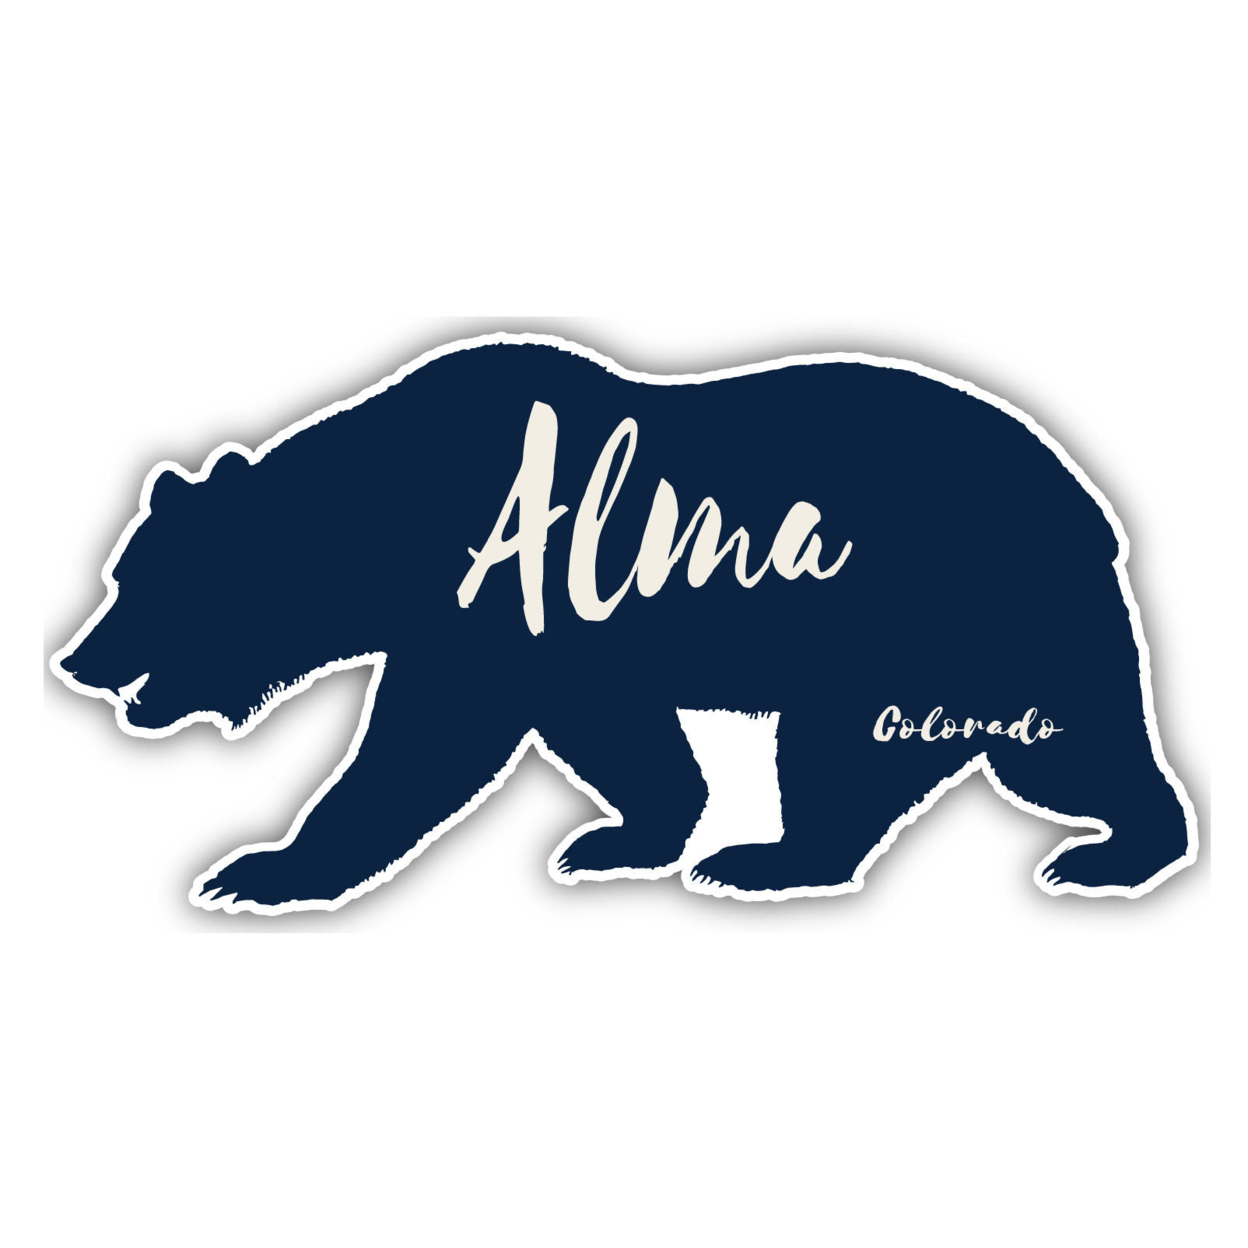 Alma Colorado Souvenir Decorative Stickers (Choose Theme And Size) - Single Unit, 2-Inch, Tent